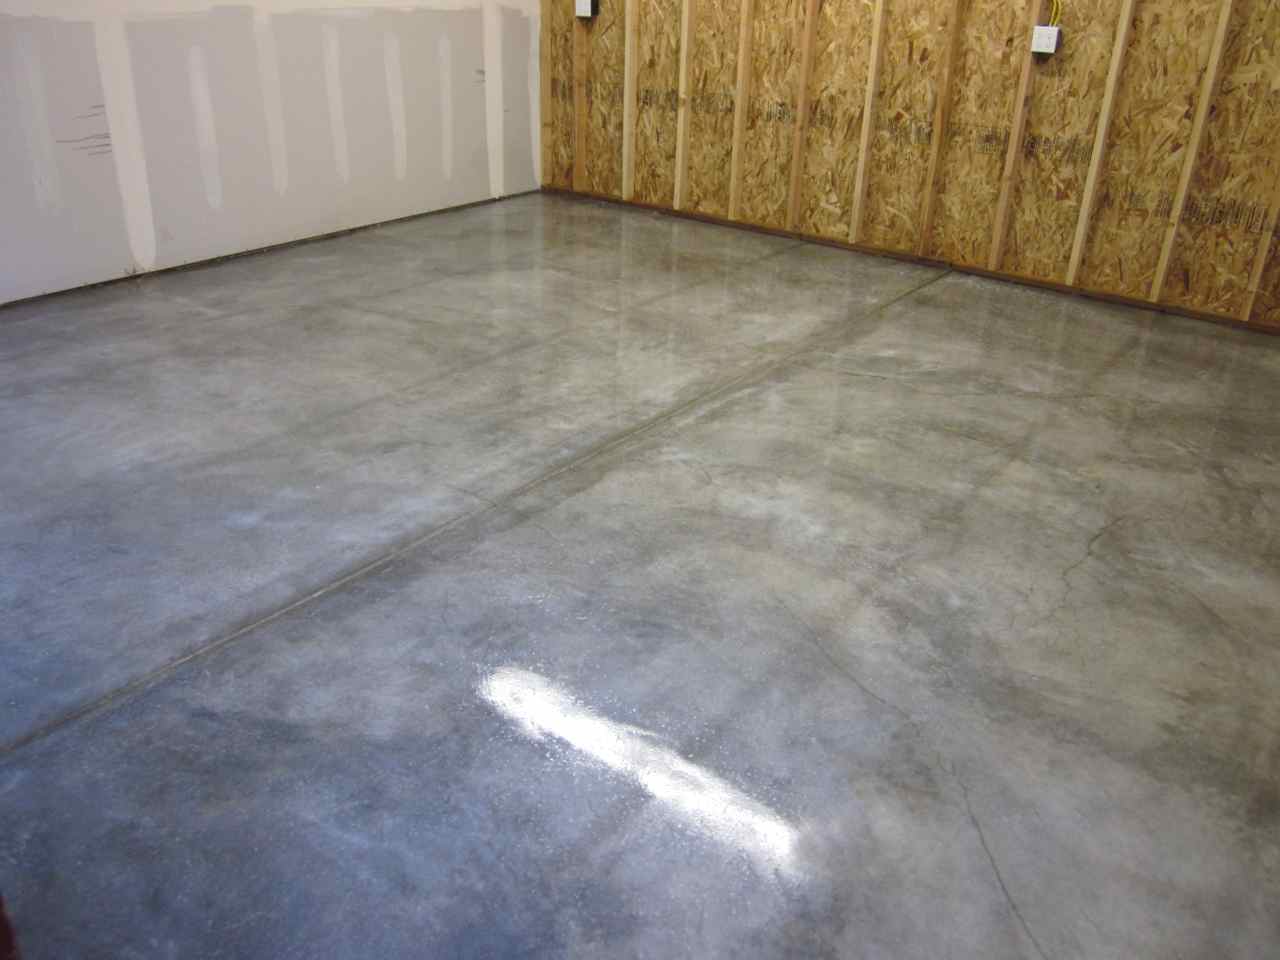 How To Seal Concrete Floor In Garage SealKrete Garage